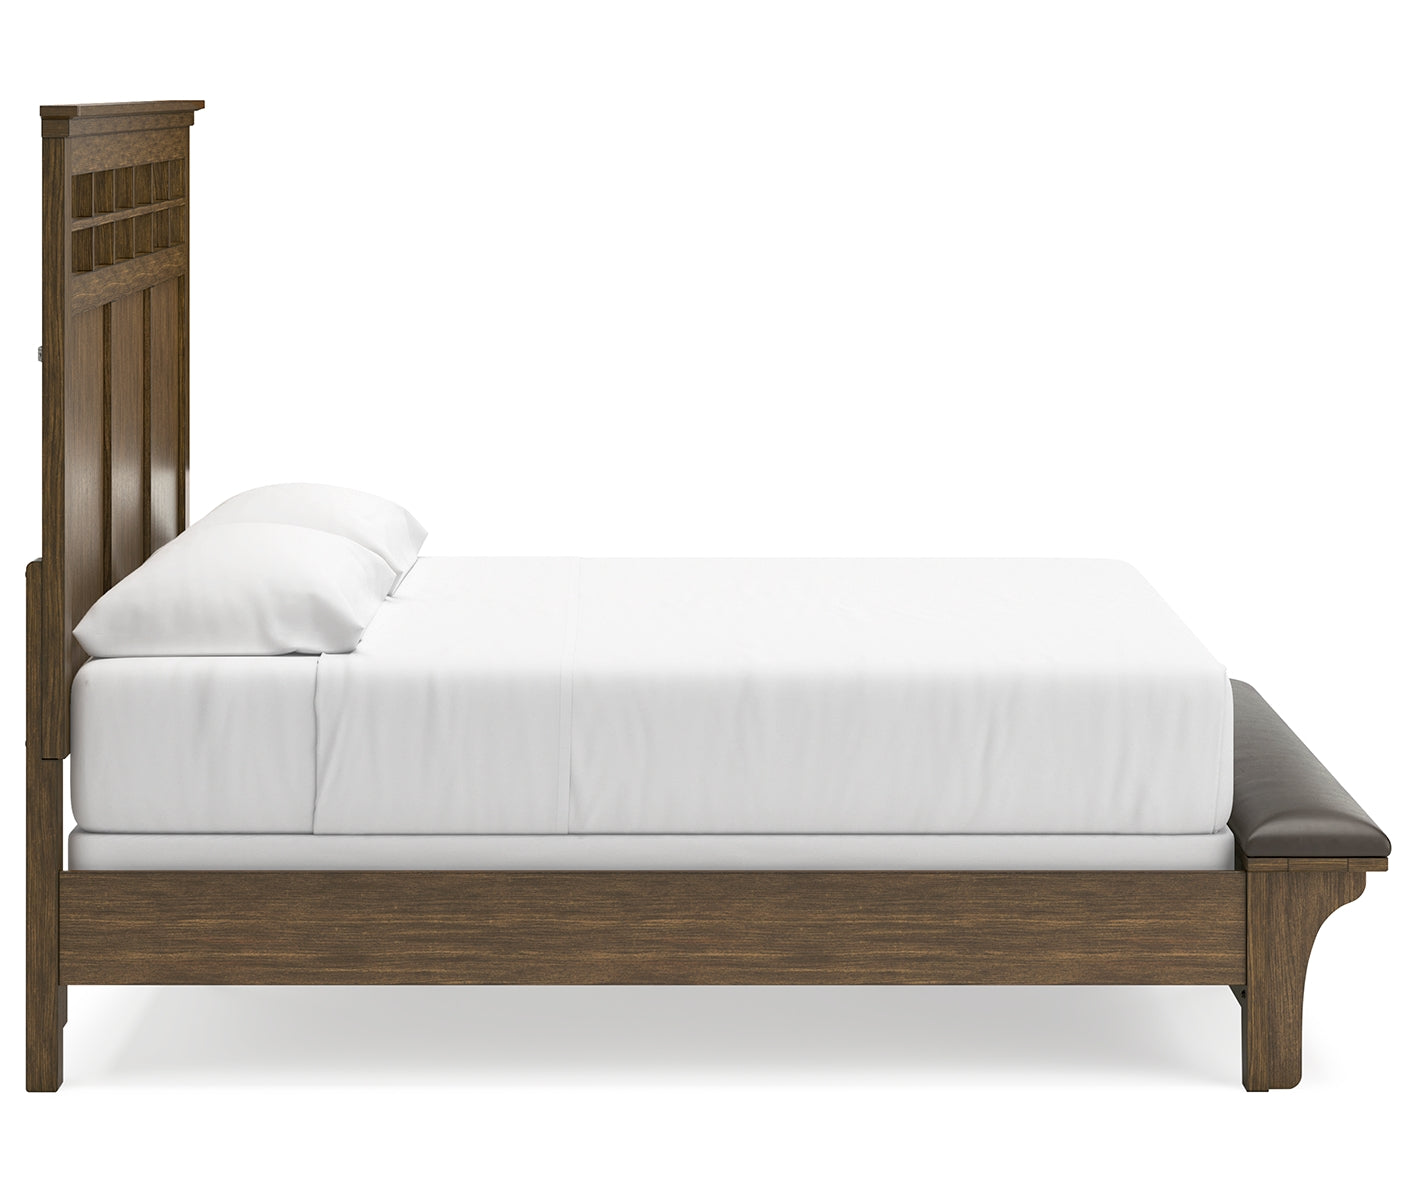 Shawbeck King Panel Bed